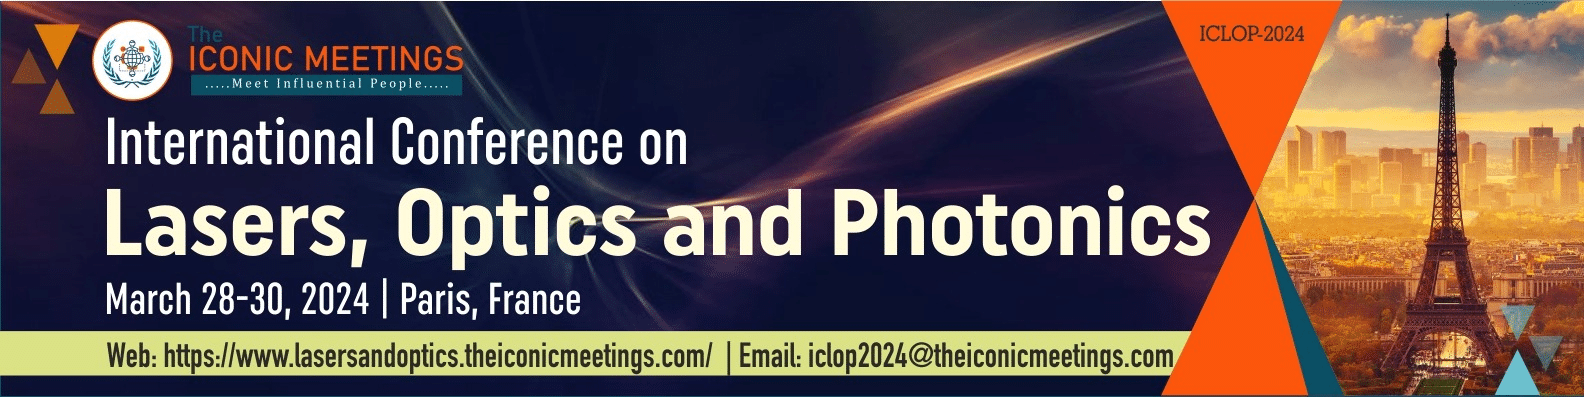 International Conference on Lasers, Optics and Photonics